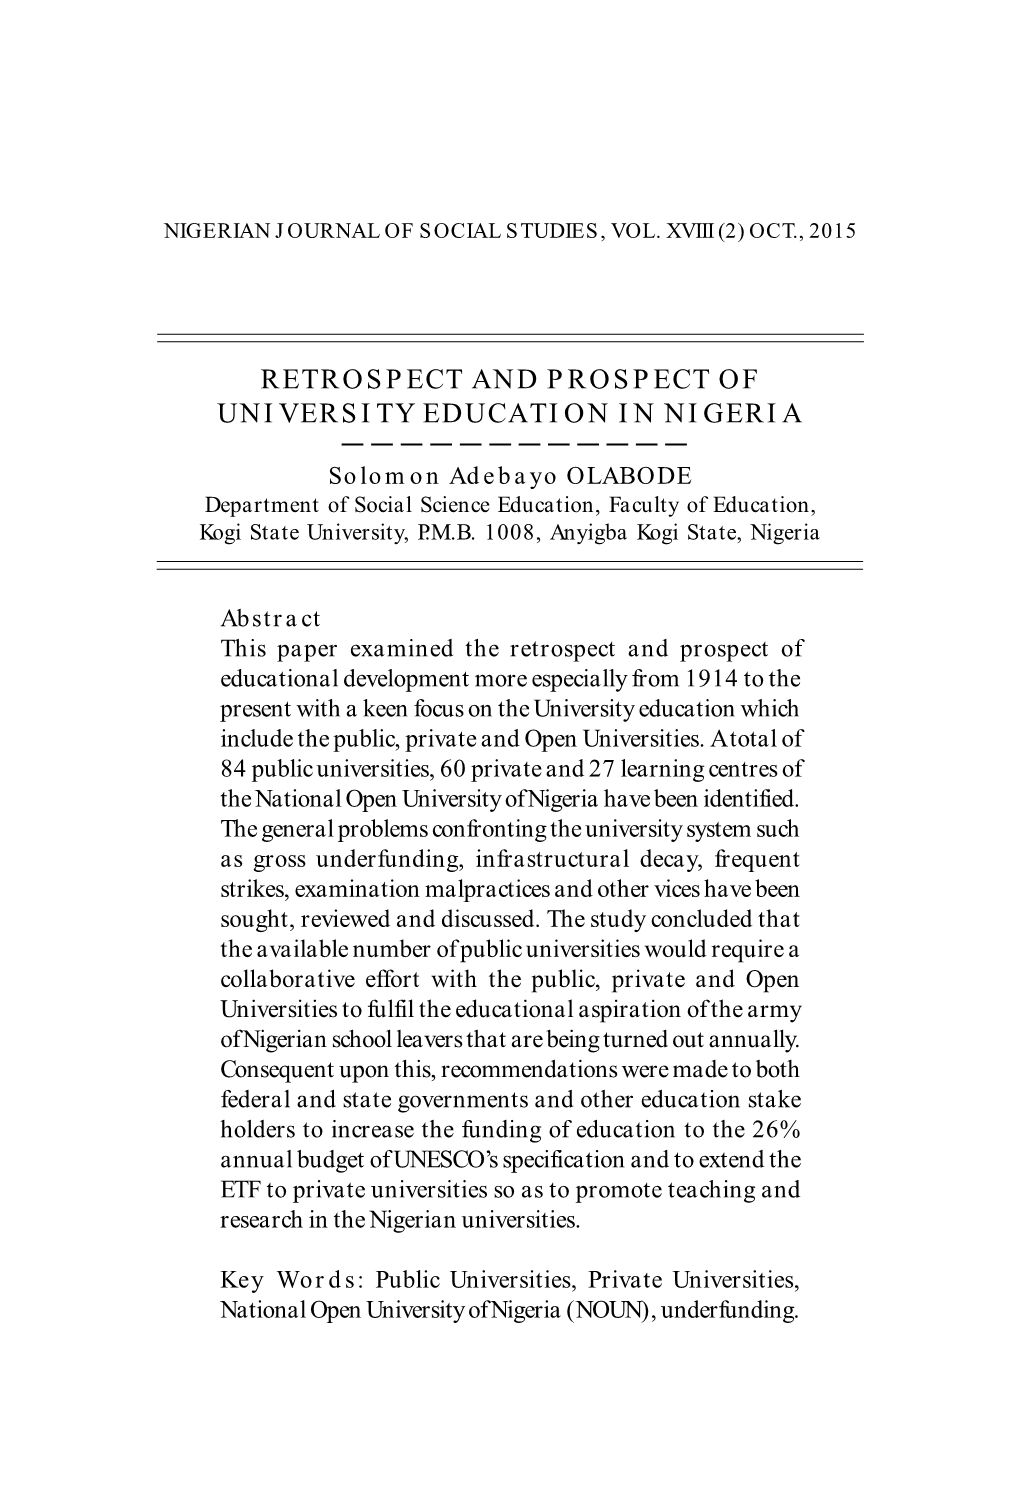 Retrospect and Prospect of University Education in Nigeria